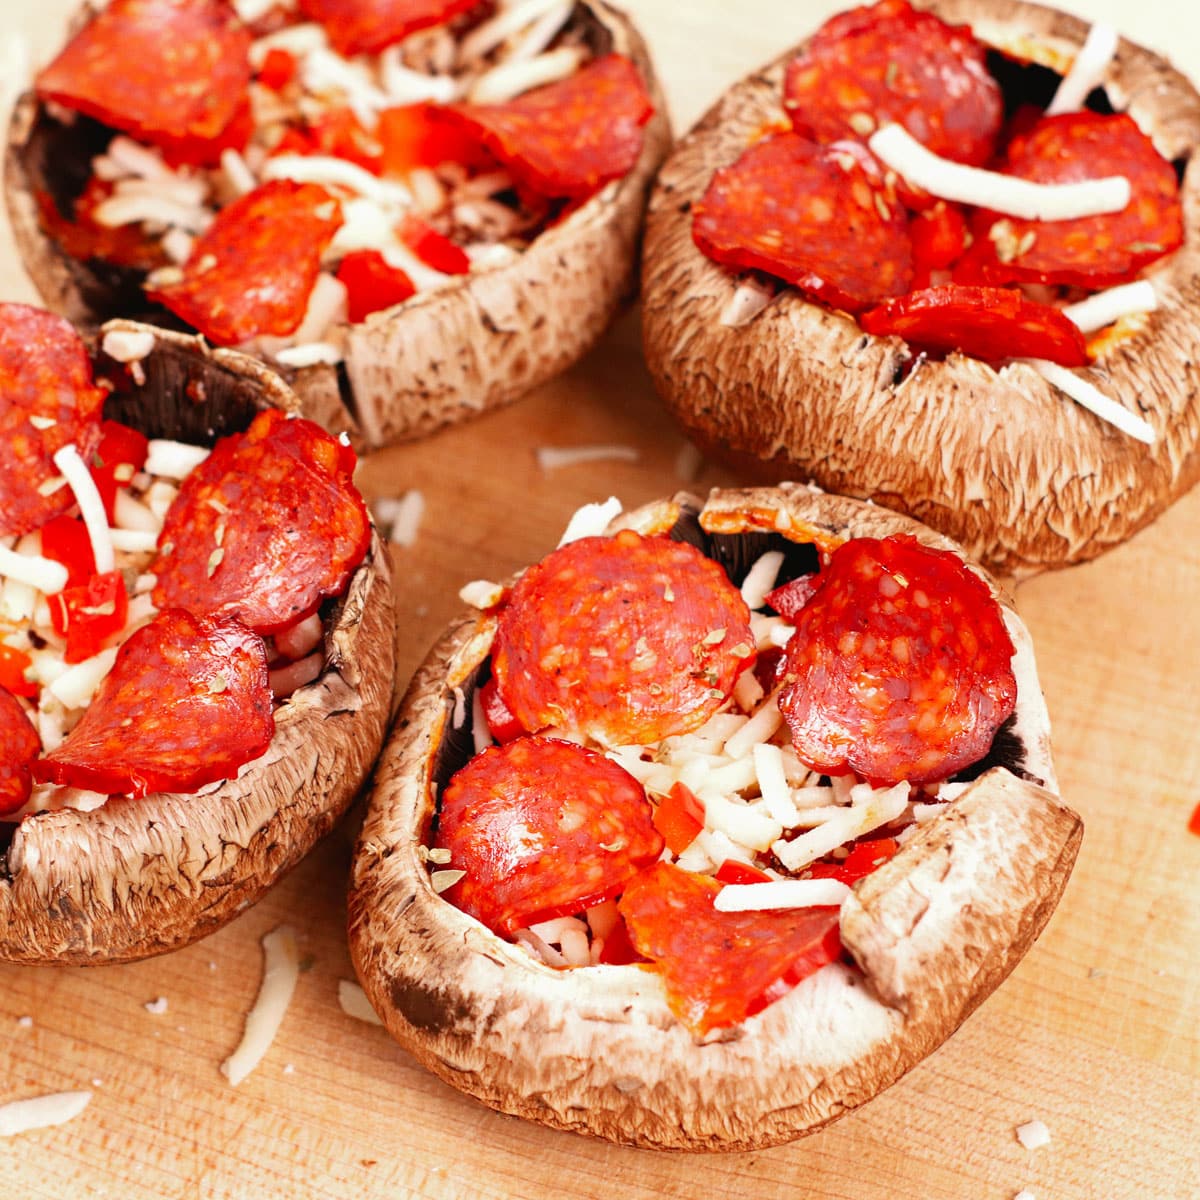 Adding pizza toppings to Portobello Mushrooms